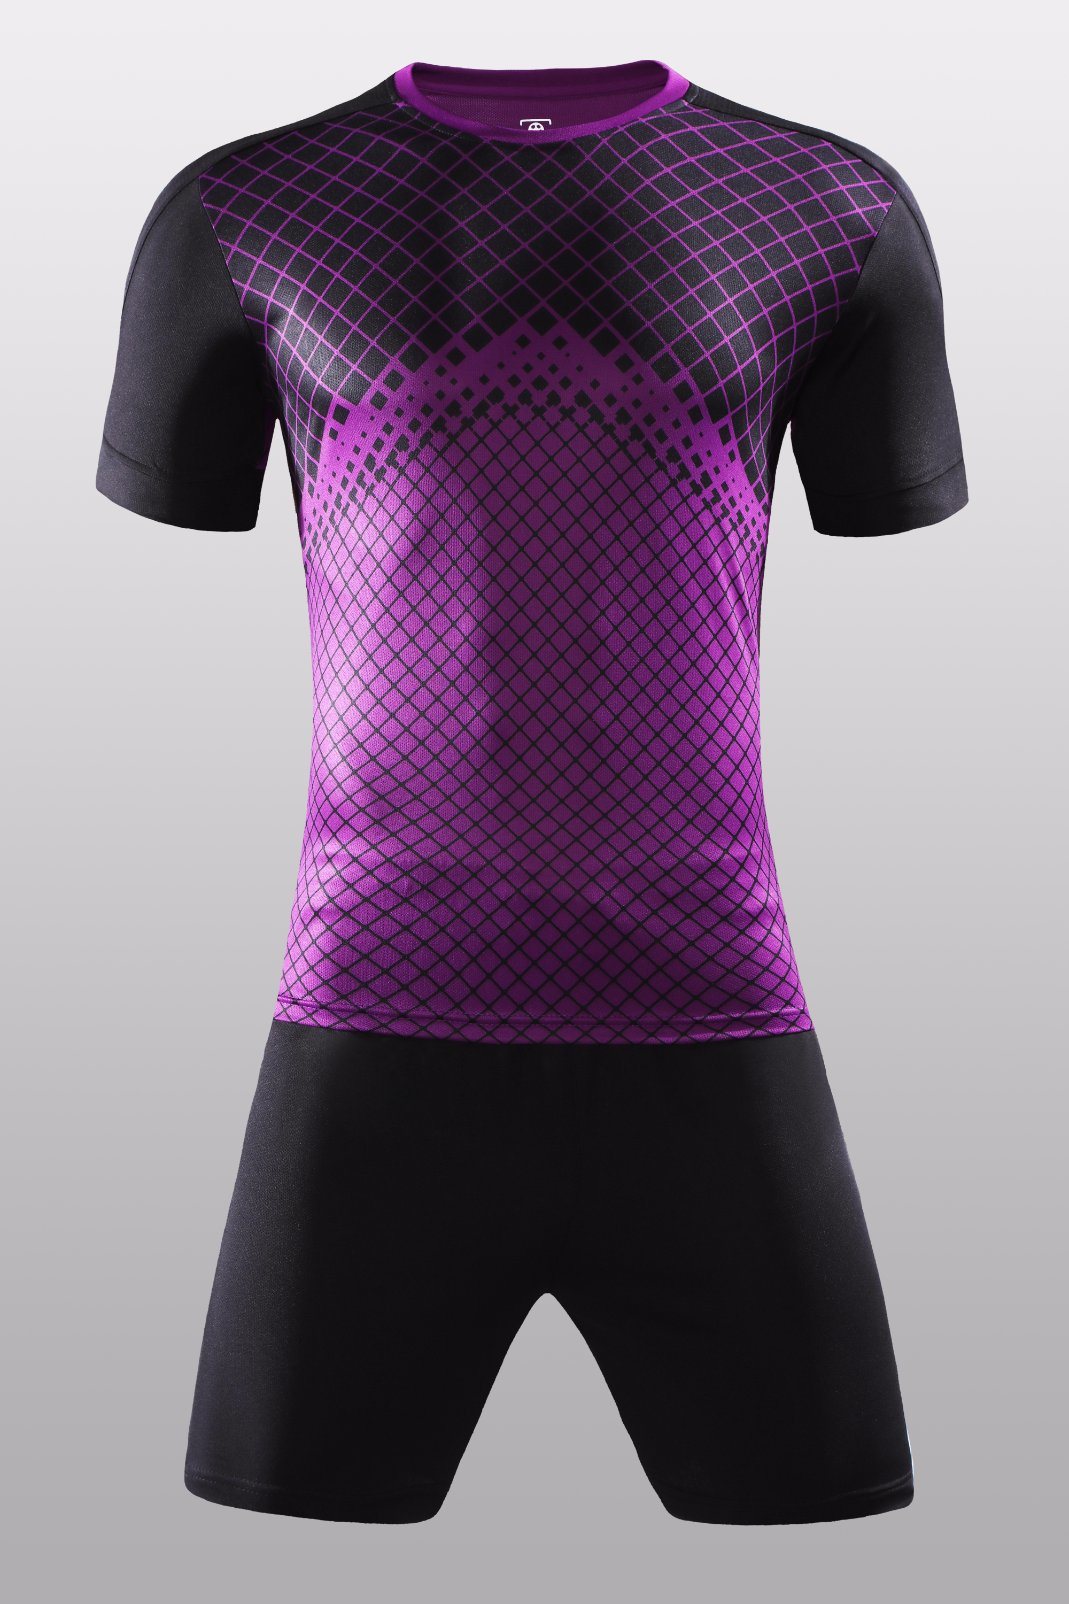 Custom Sport Football Jerseys, fashion High Quality Soccer Uniforms, Soccer Jersey Manufacturer